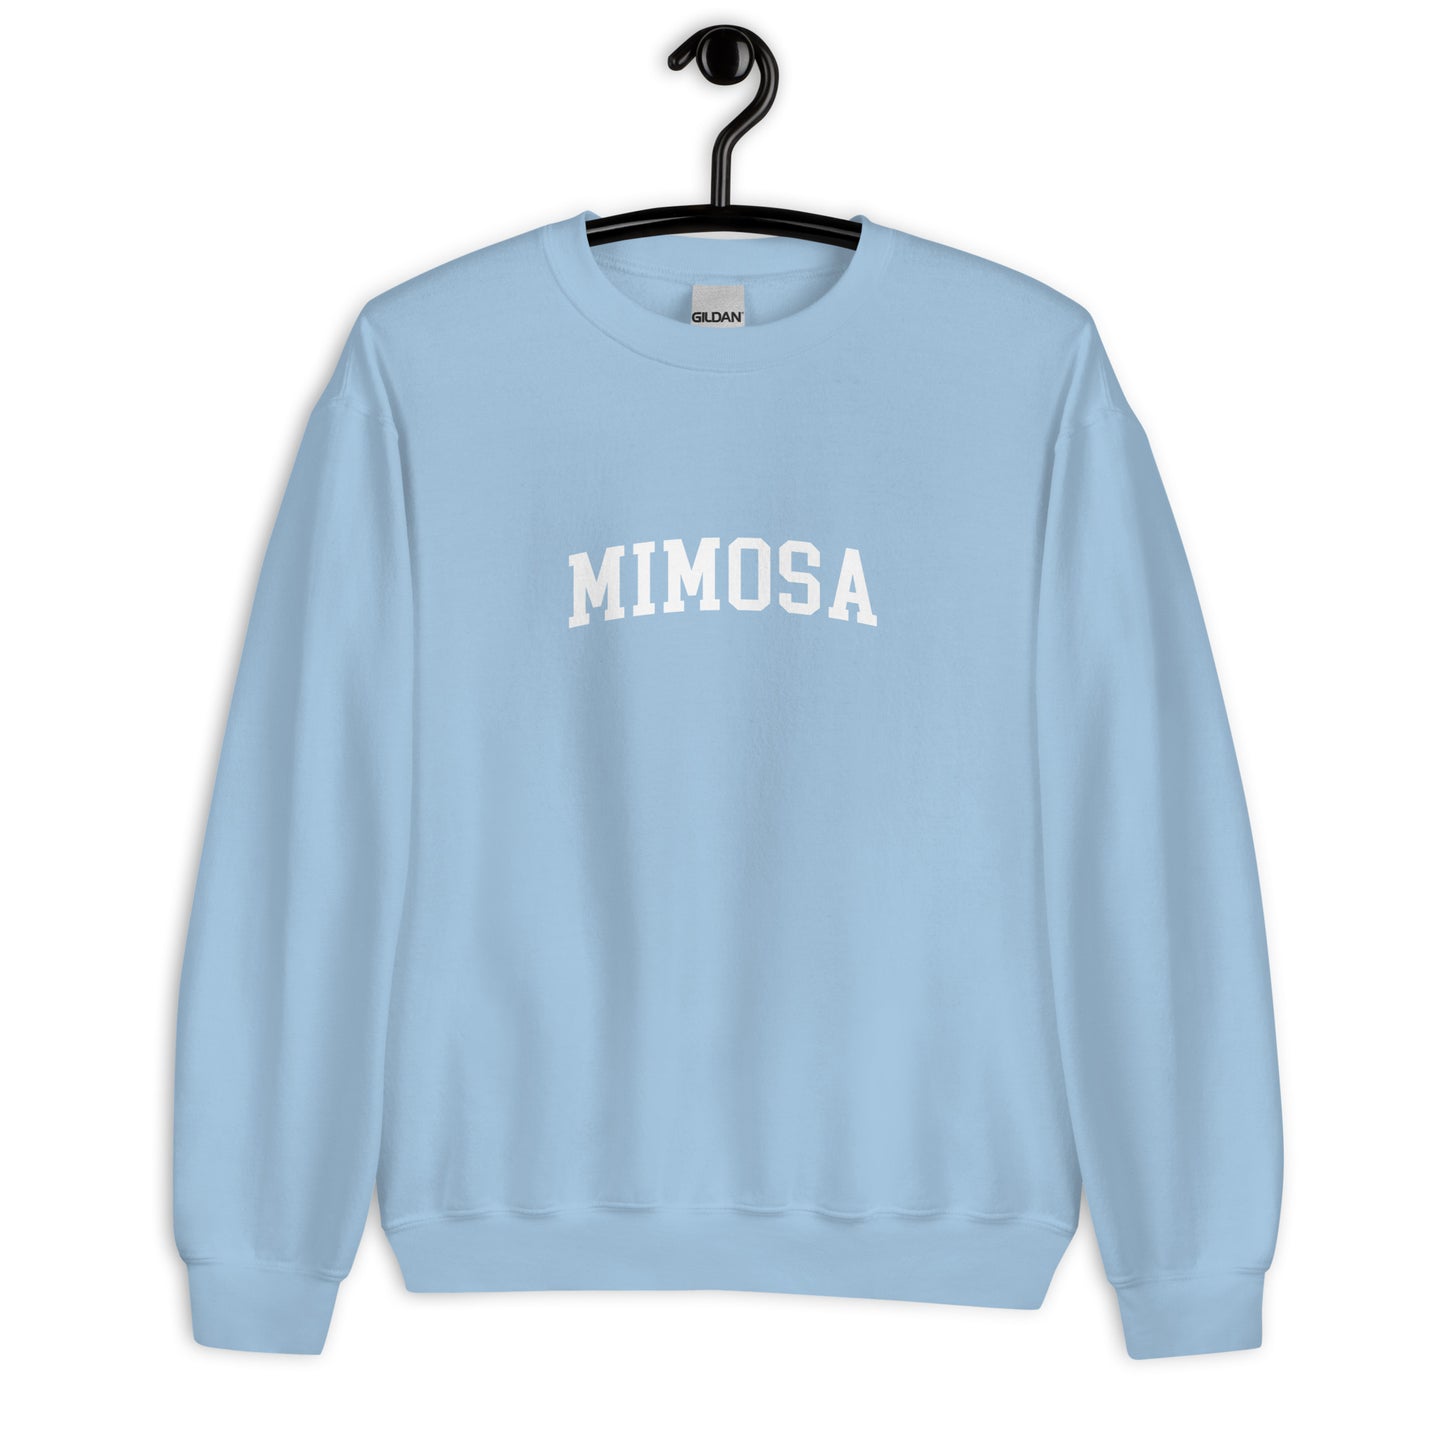 Mimosa Sweatshirt - Arched Font